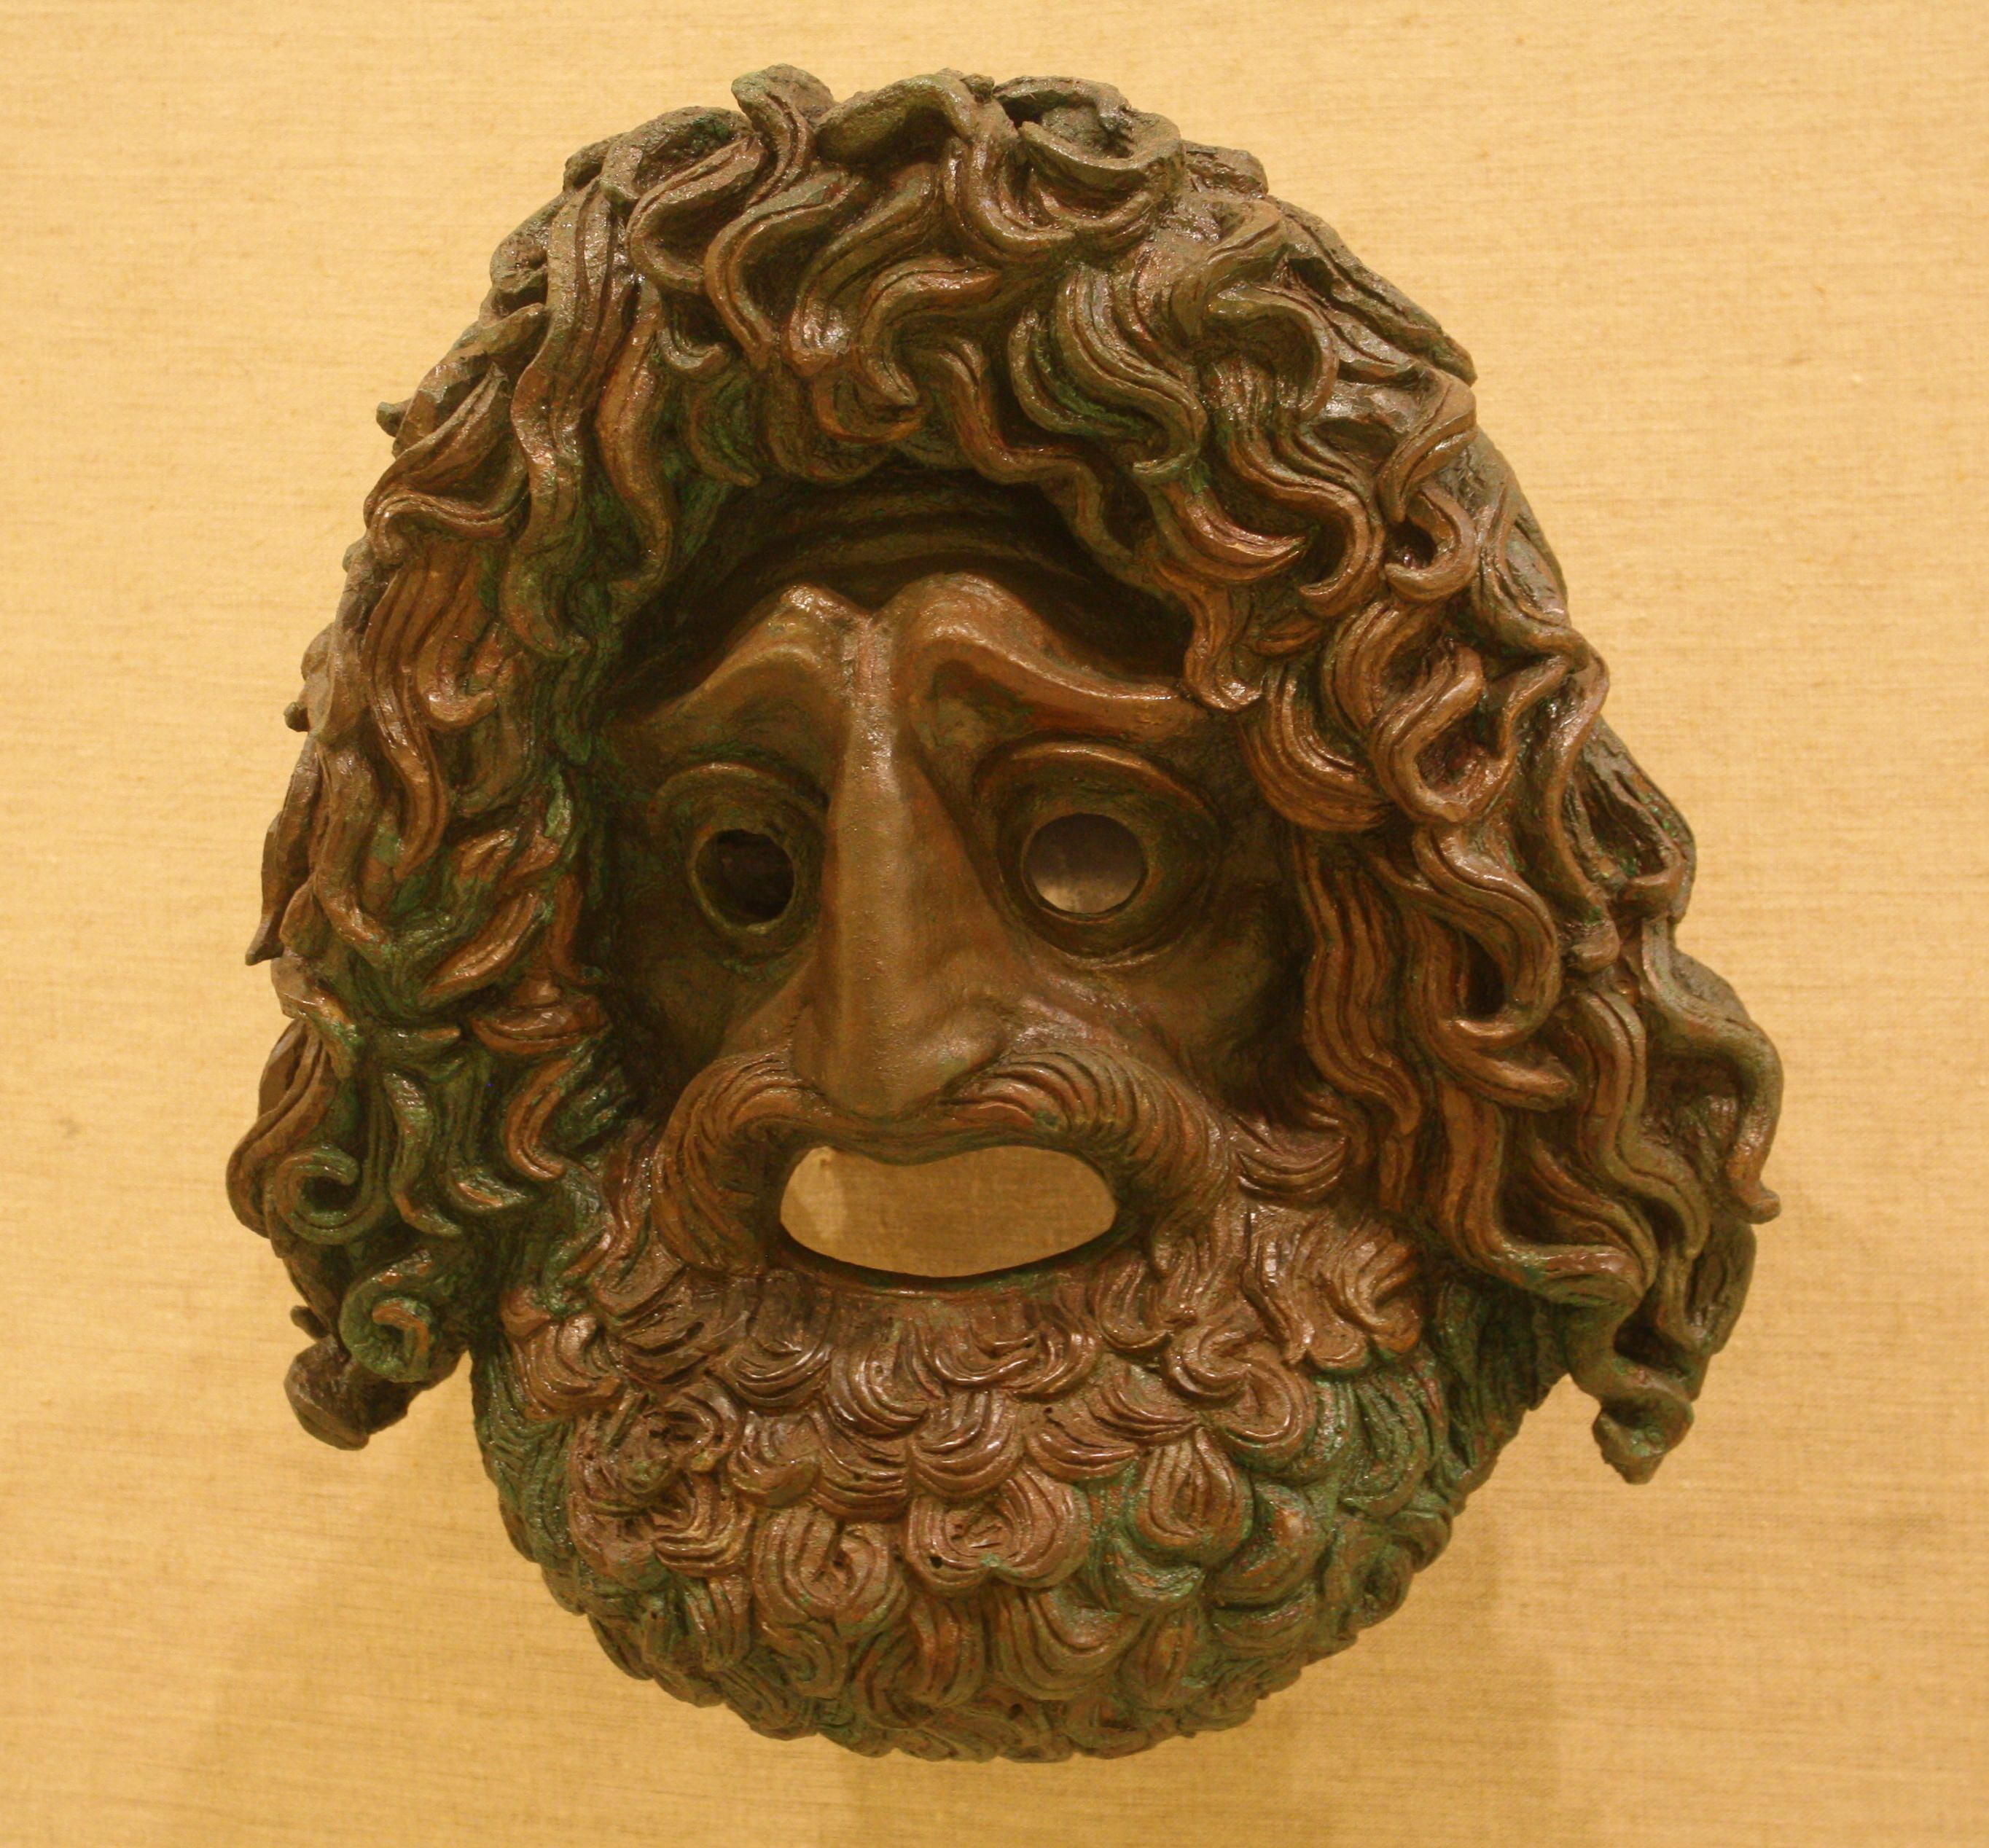 https://www.worldhistory.org/image/3701/greek-tragedy-theatre-mask/download/